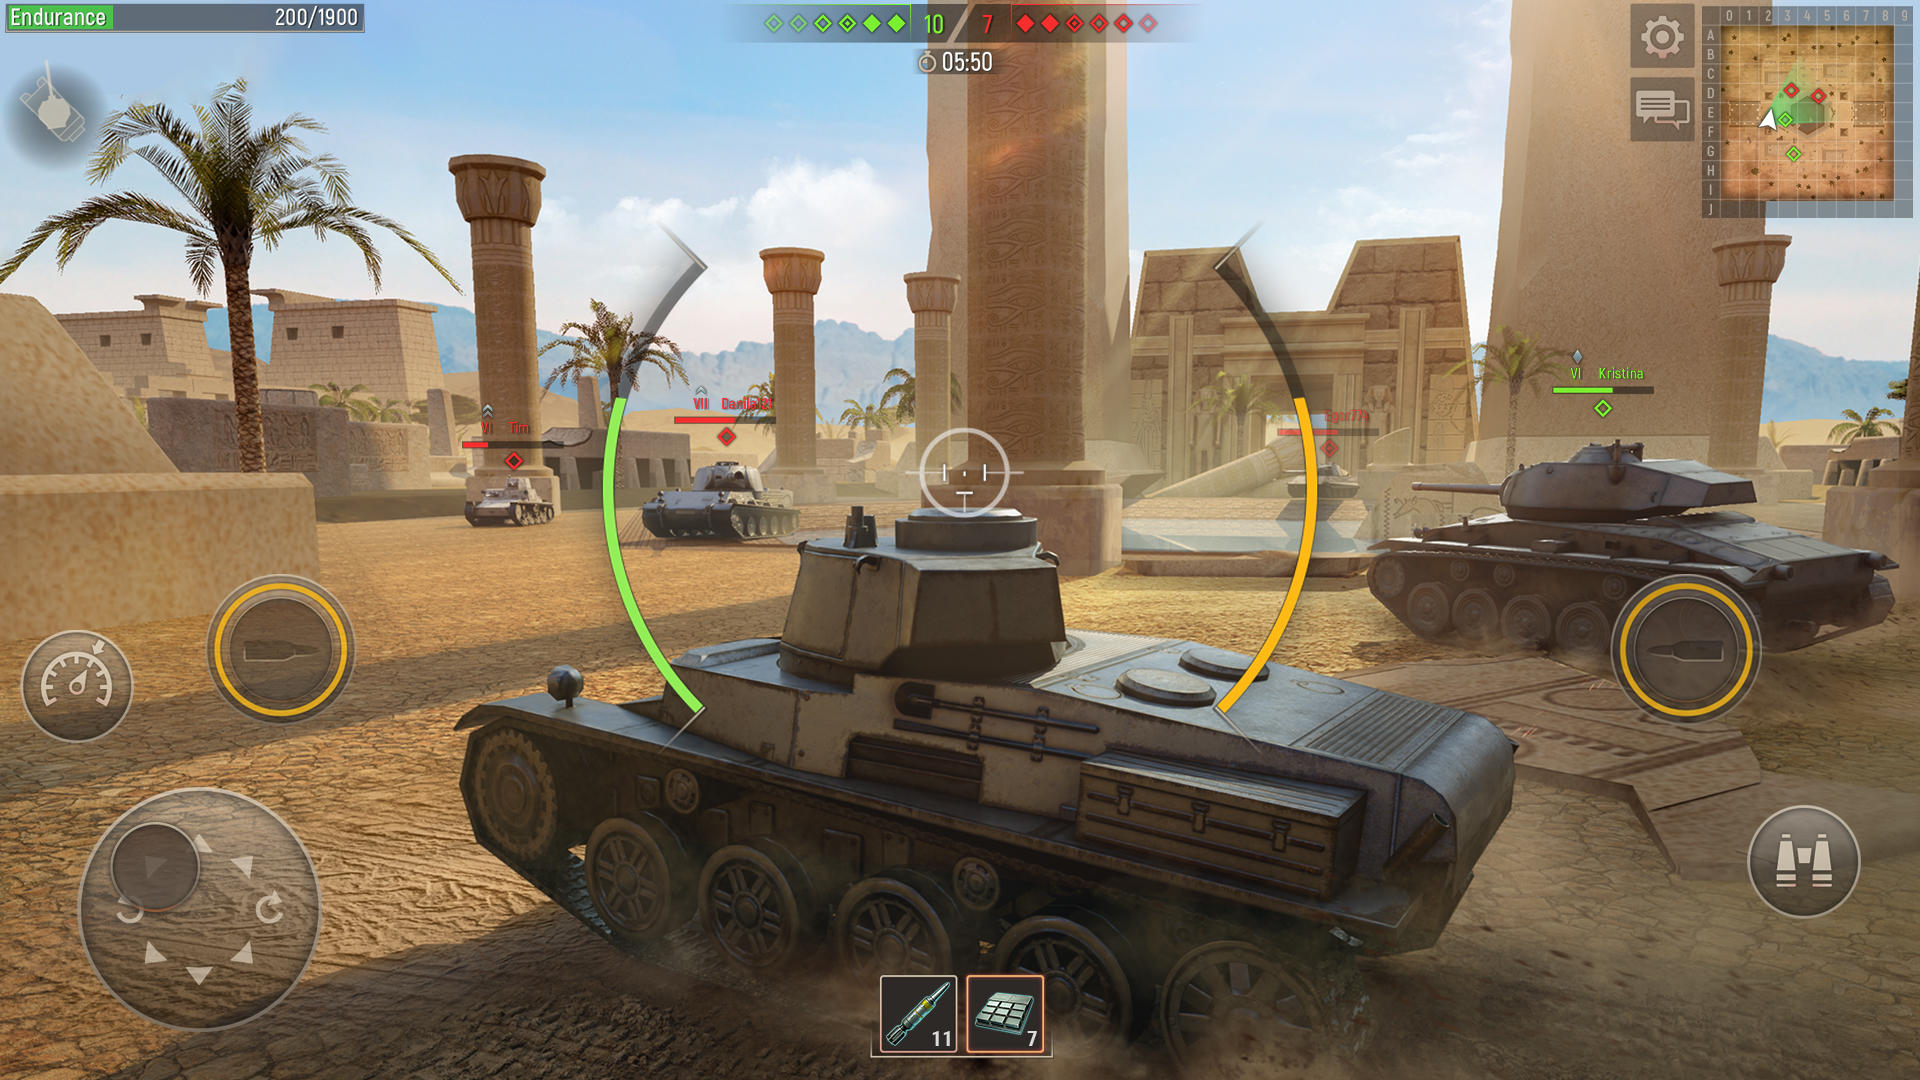 Screenshot 1 of Battle Tanks: เกมสงครามออนไลน์ 6.1.4